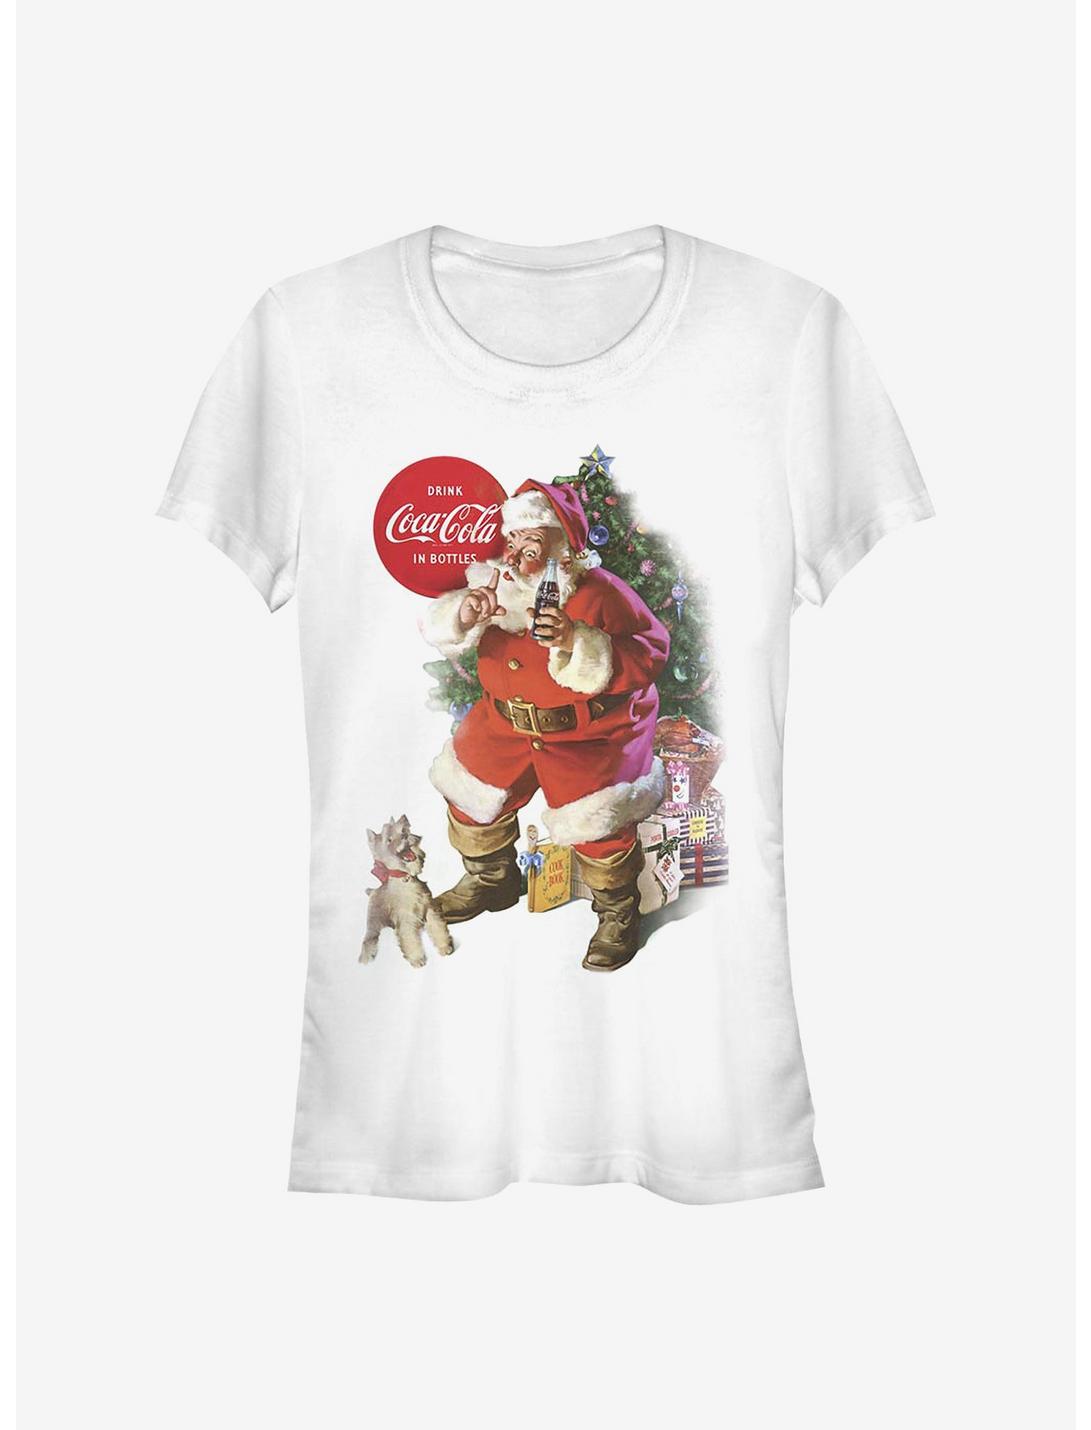 Coke Coca-Cola Surprised Puppy Girls T-Shirt, WHITE, hi-res